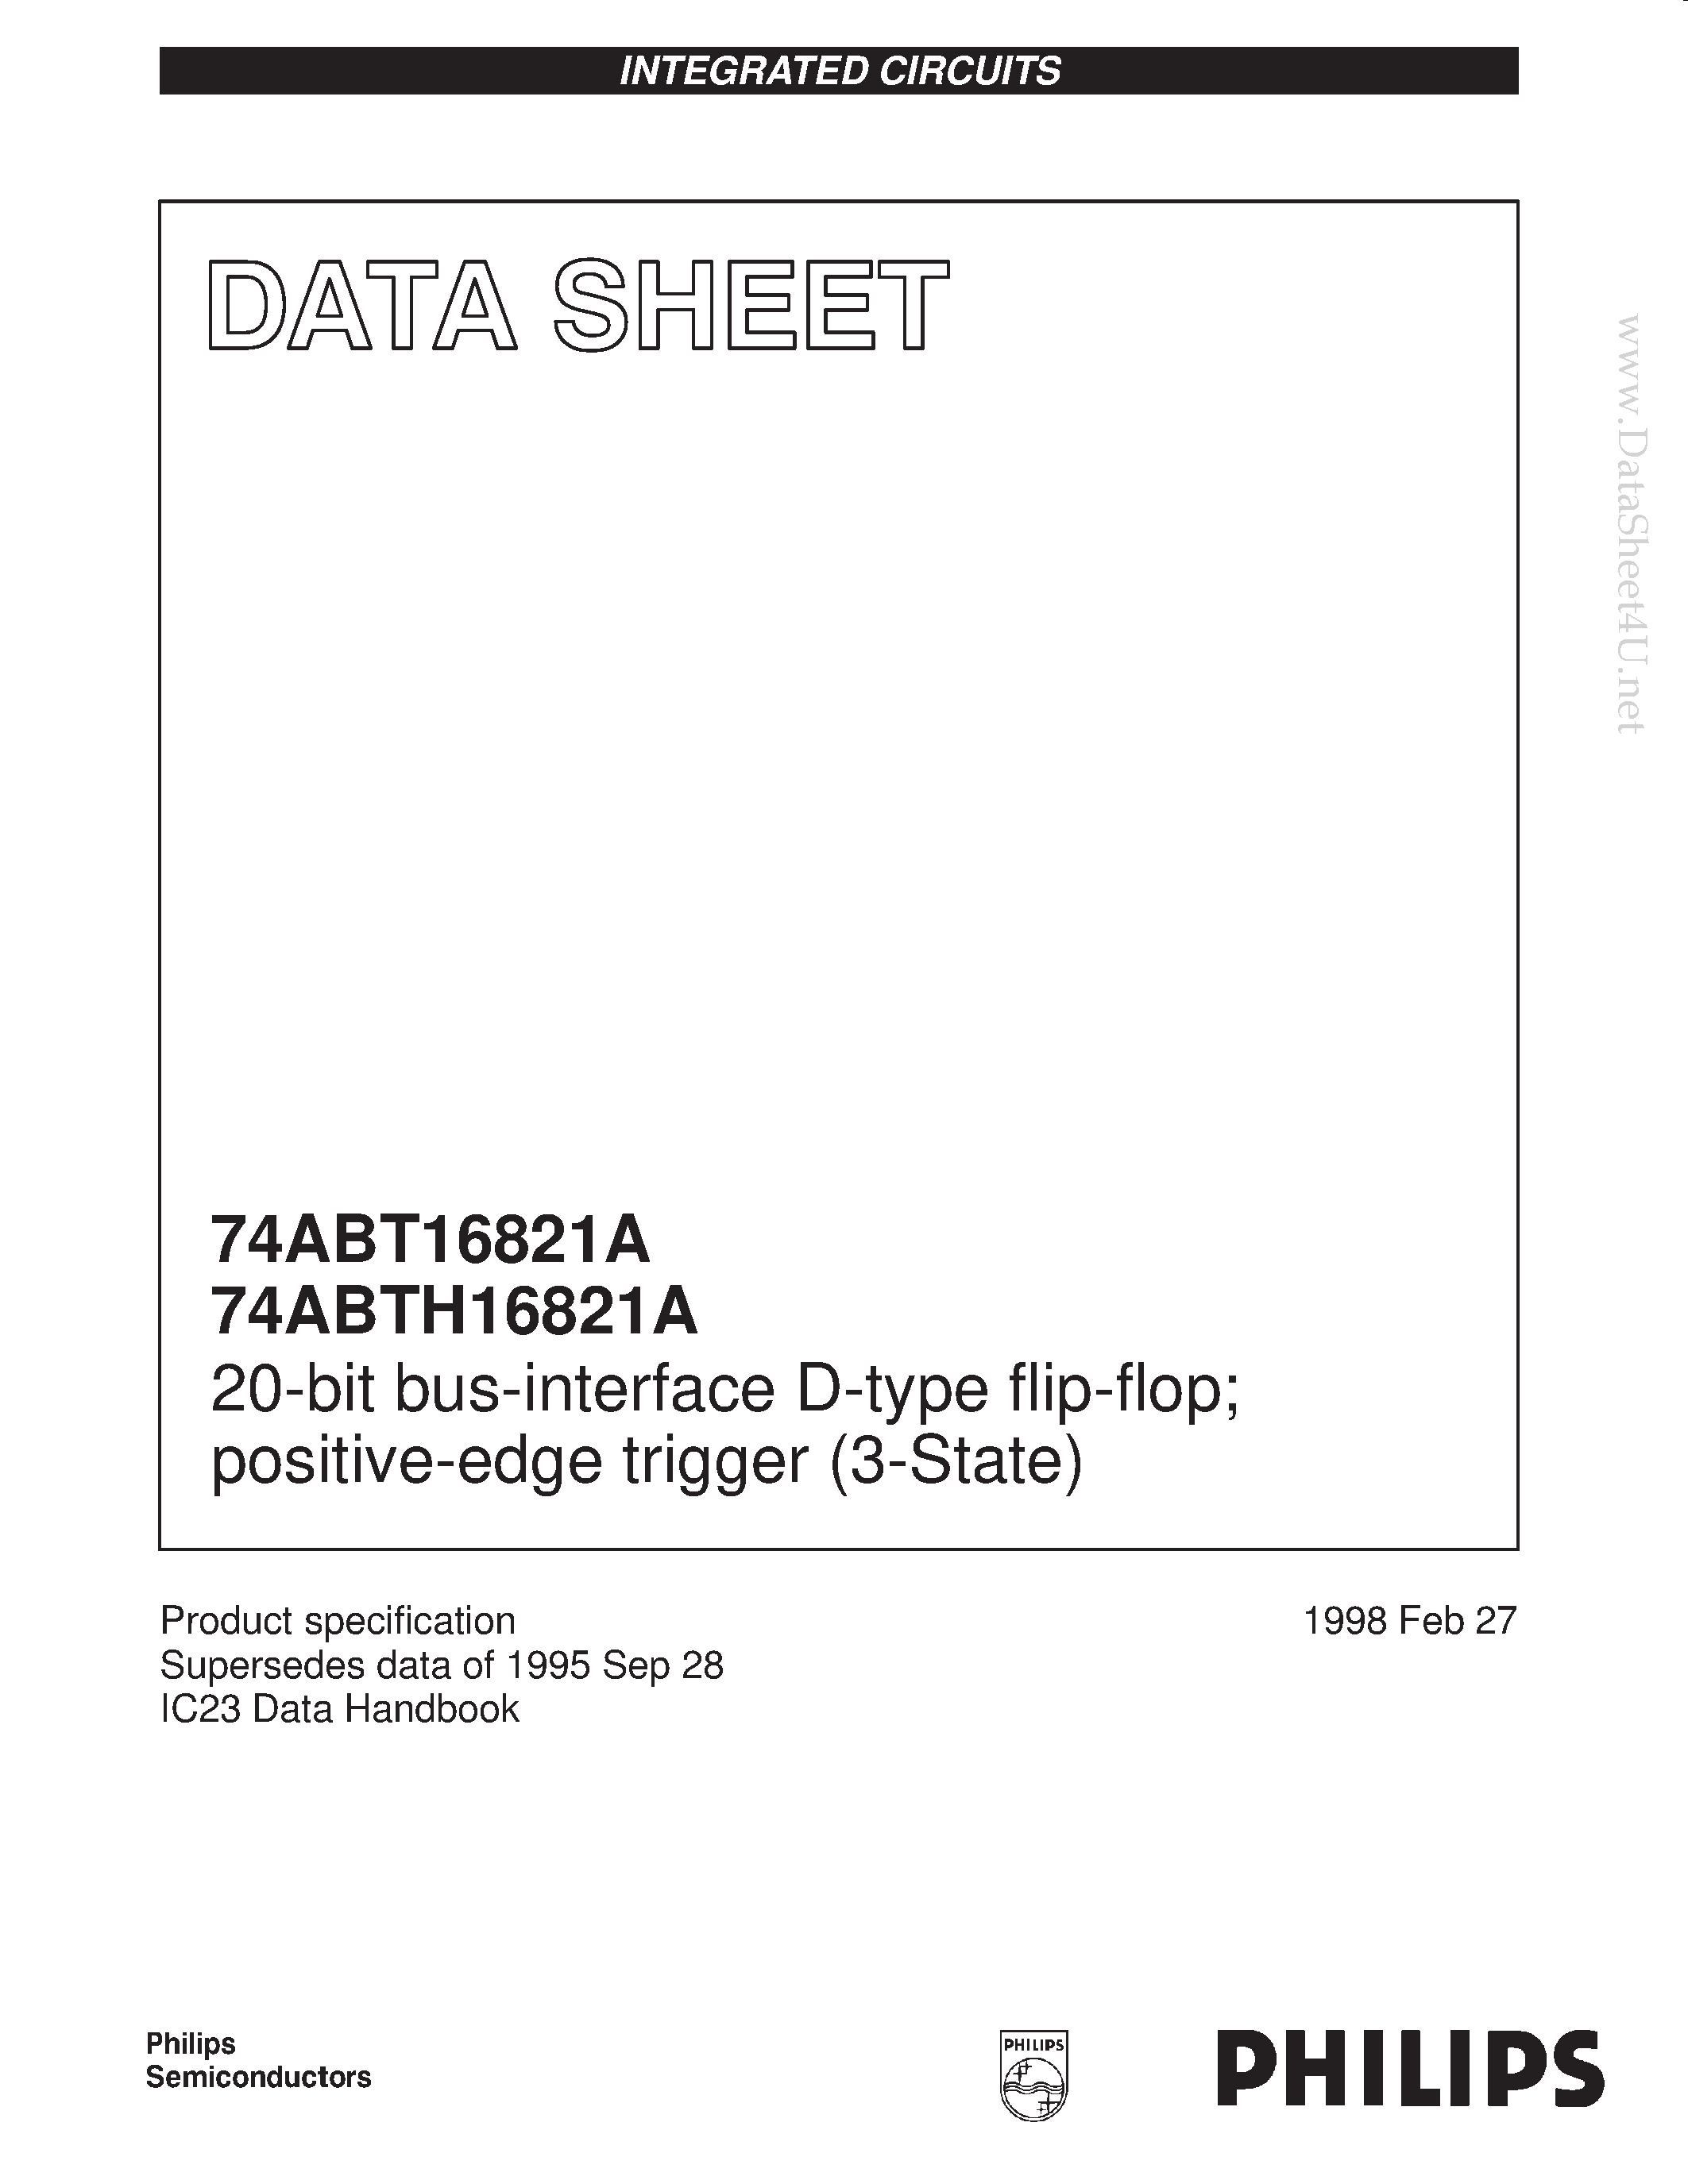 Datasheet 74ABTH16821ADGG - 20-bit bus-interface D-type flip-flop; positive-edge trigger 3-State page 1